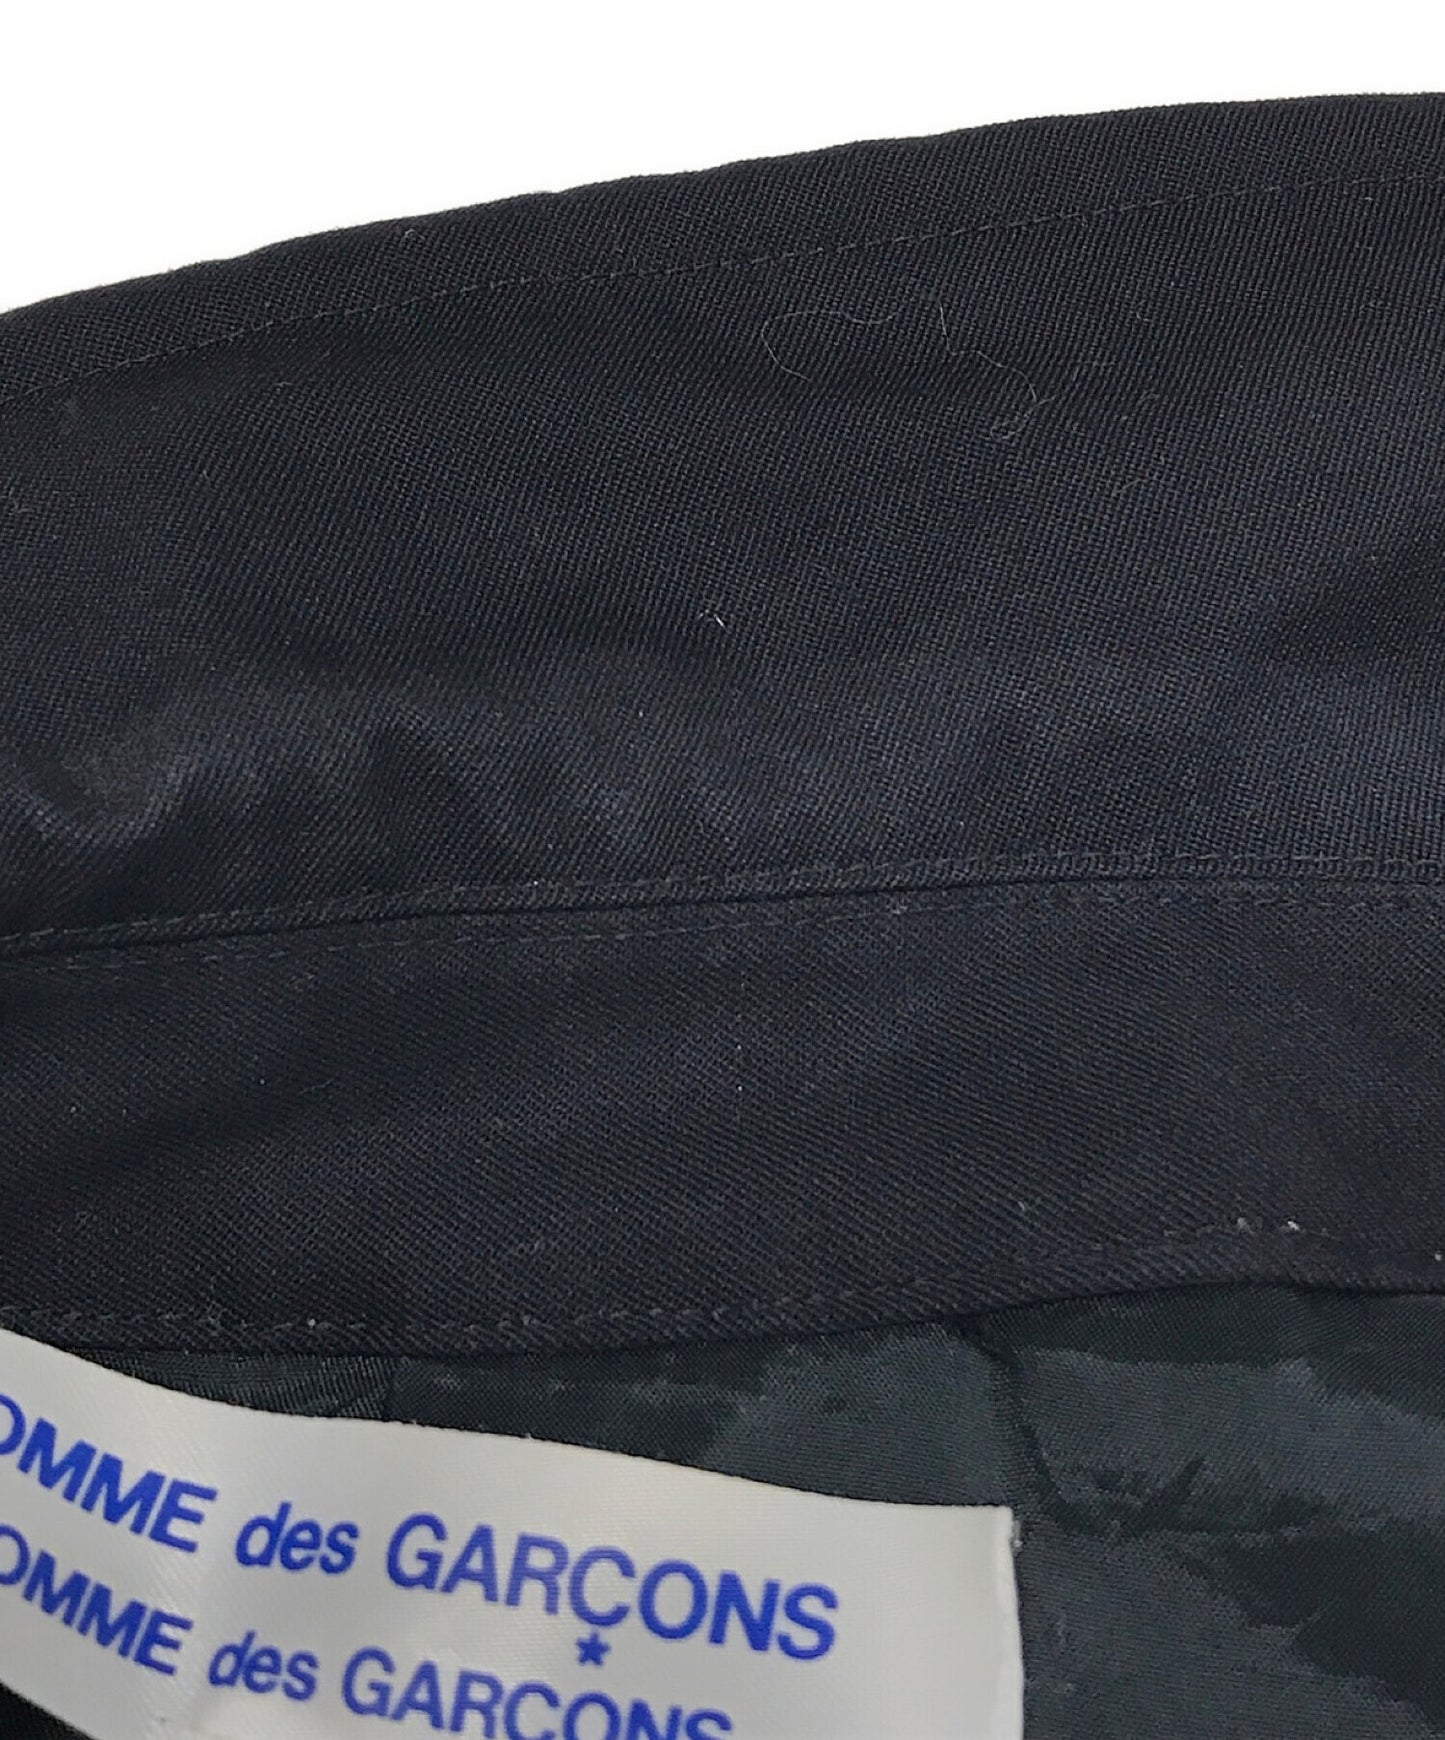 [Pre-owned] COMME des GARCONS COMME des GARCONS stenkler coat RU-C009